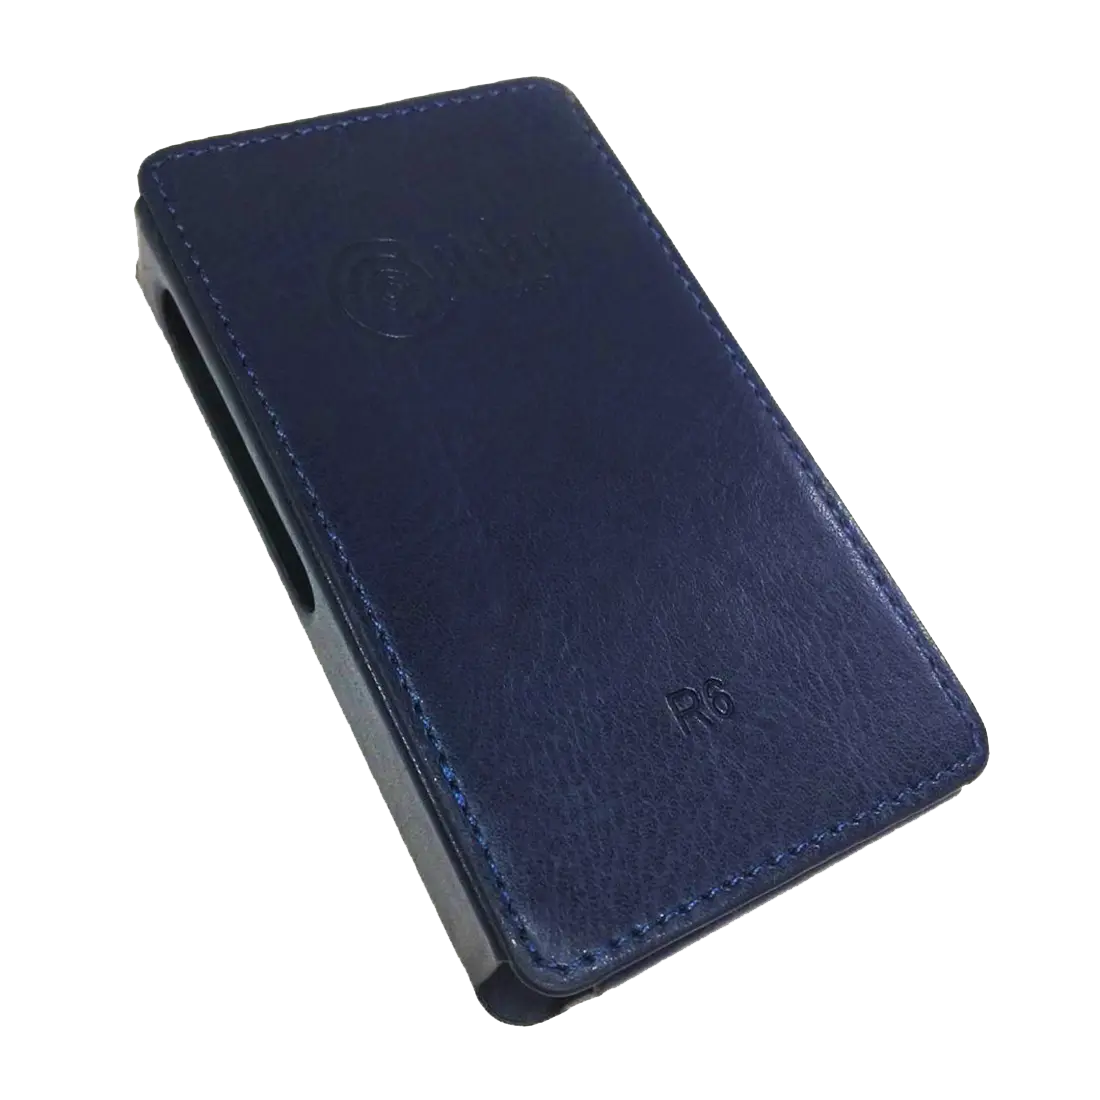 R6 III (Gen 3) leather case - HiBy